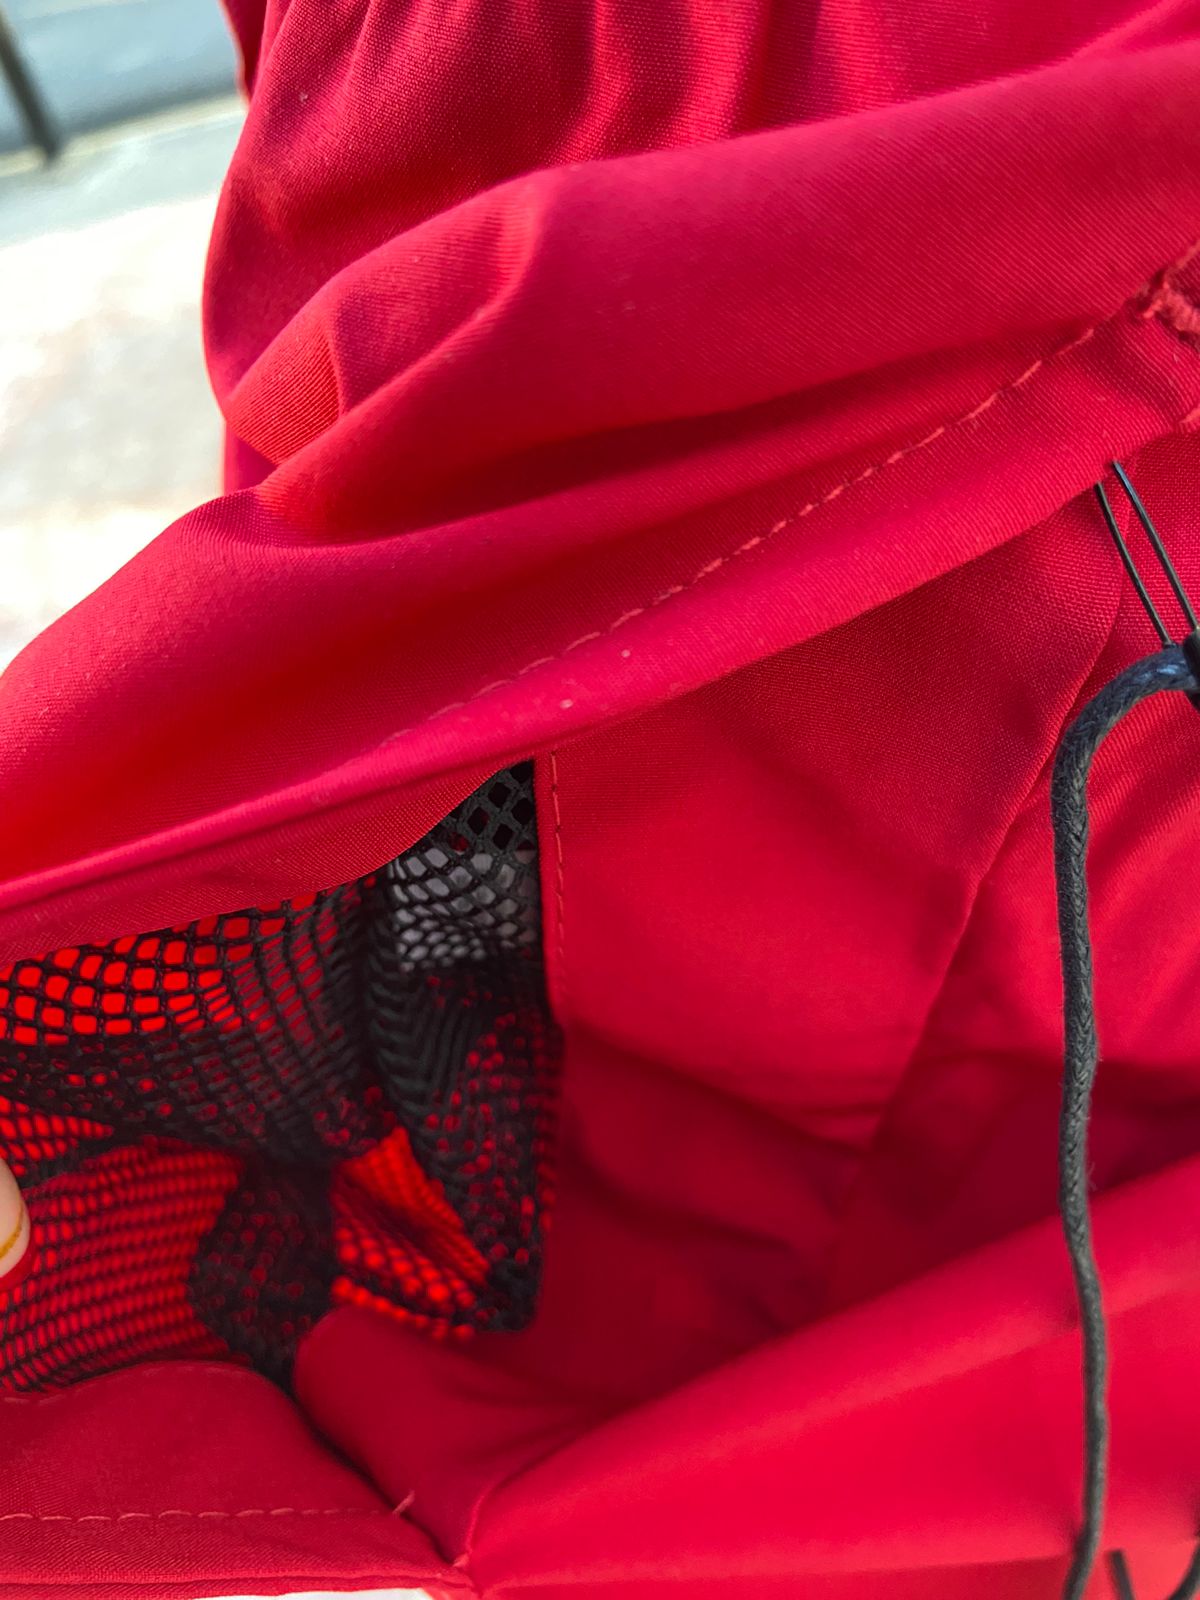 Bañador Fashion Nova original rojo oscuro liso, con lazos ajustables TIENE PROTECTOR MALLA DENTRO.